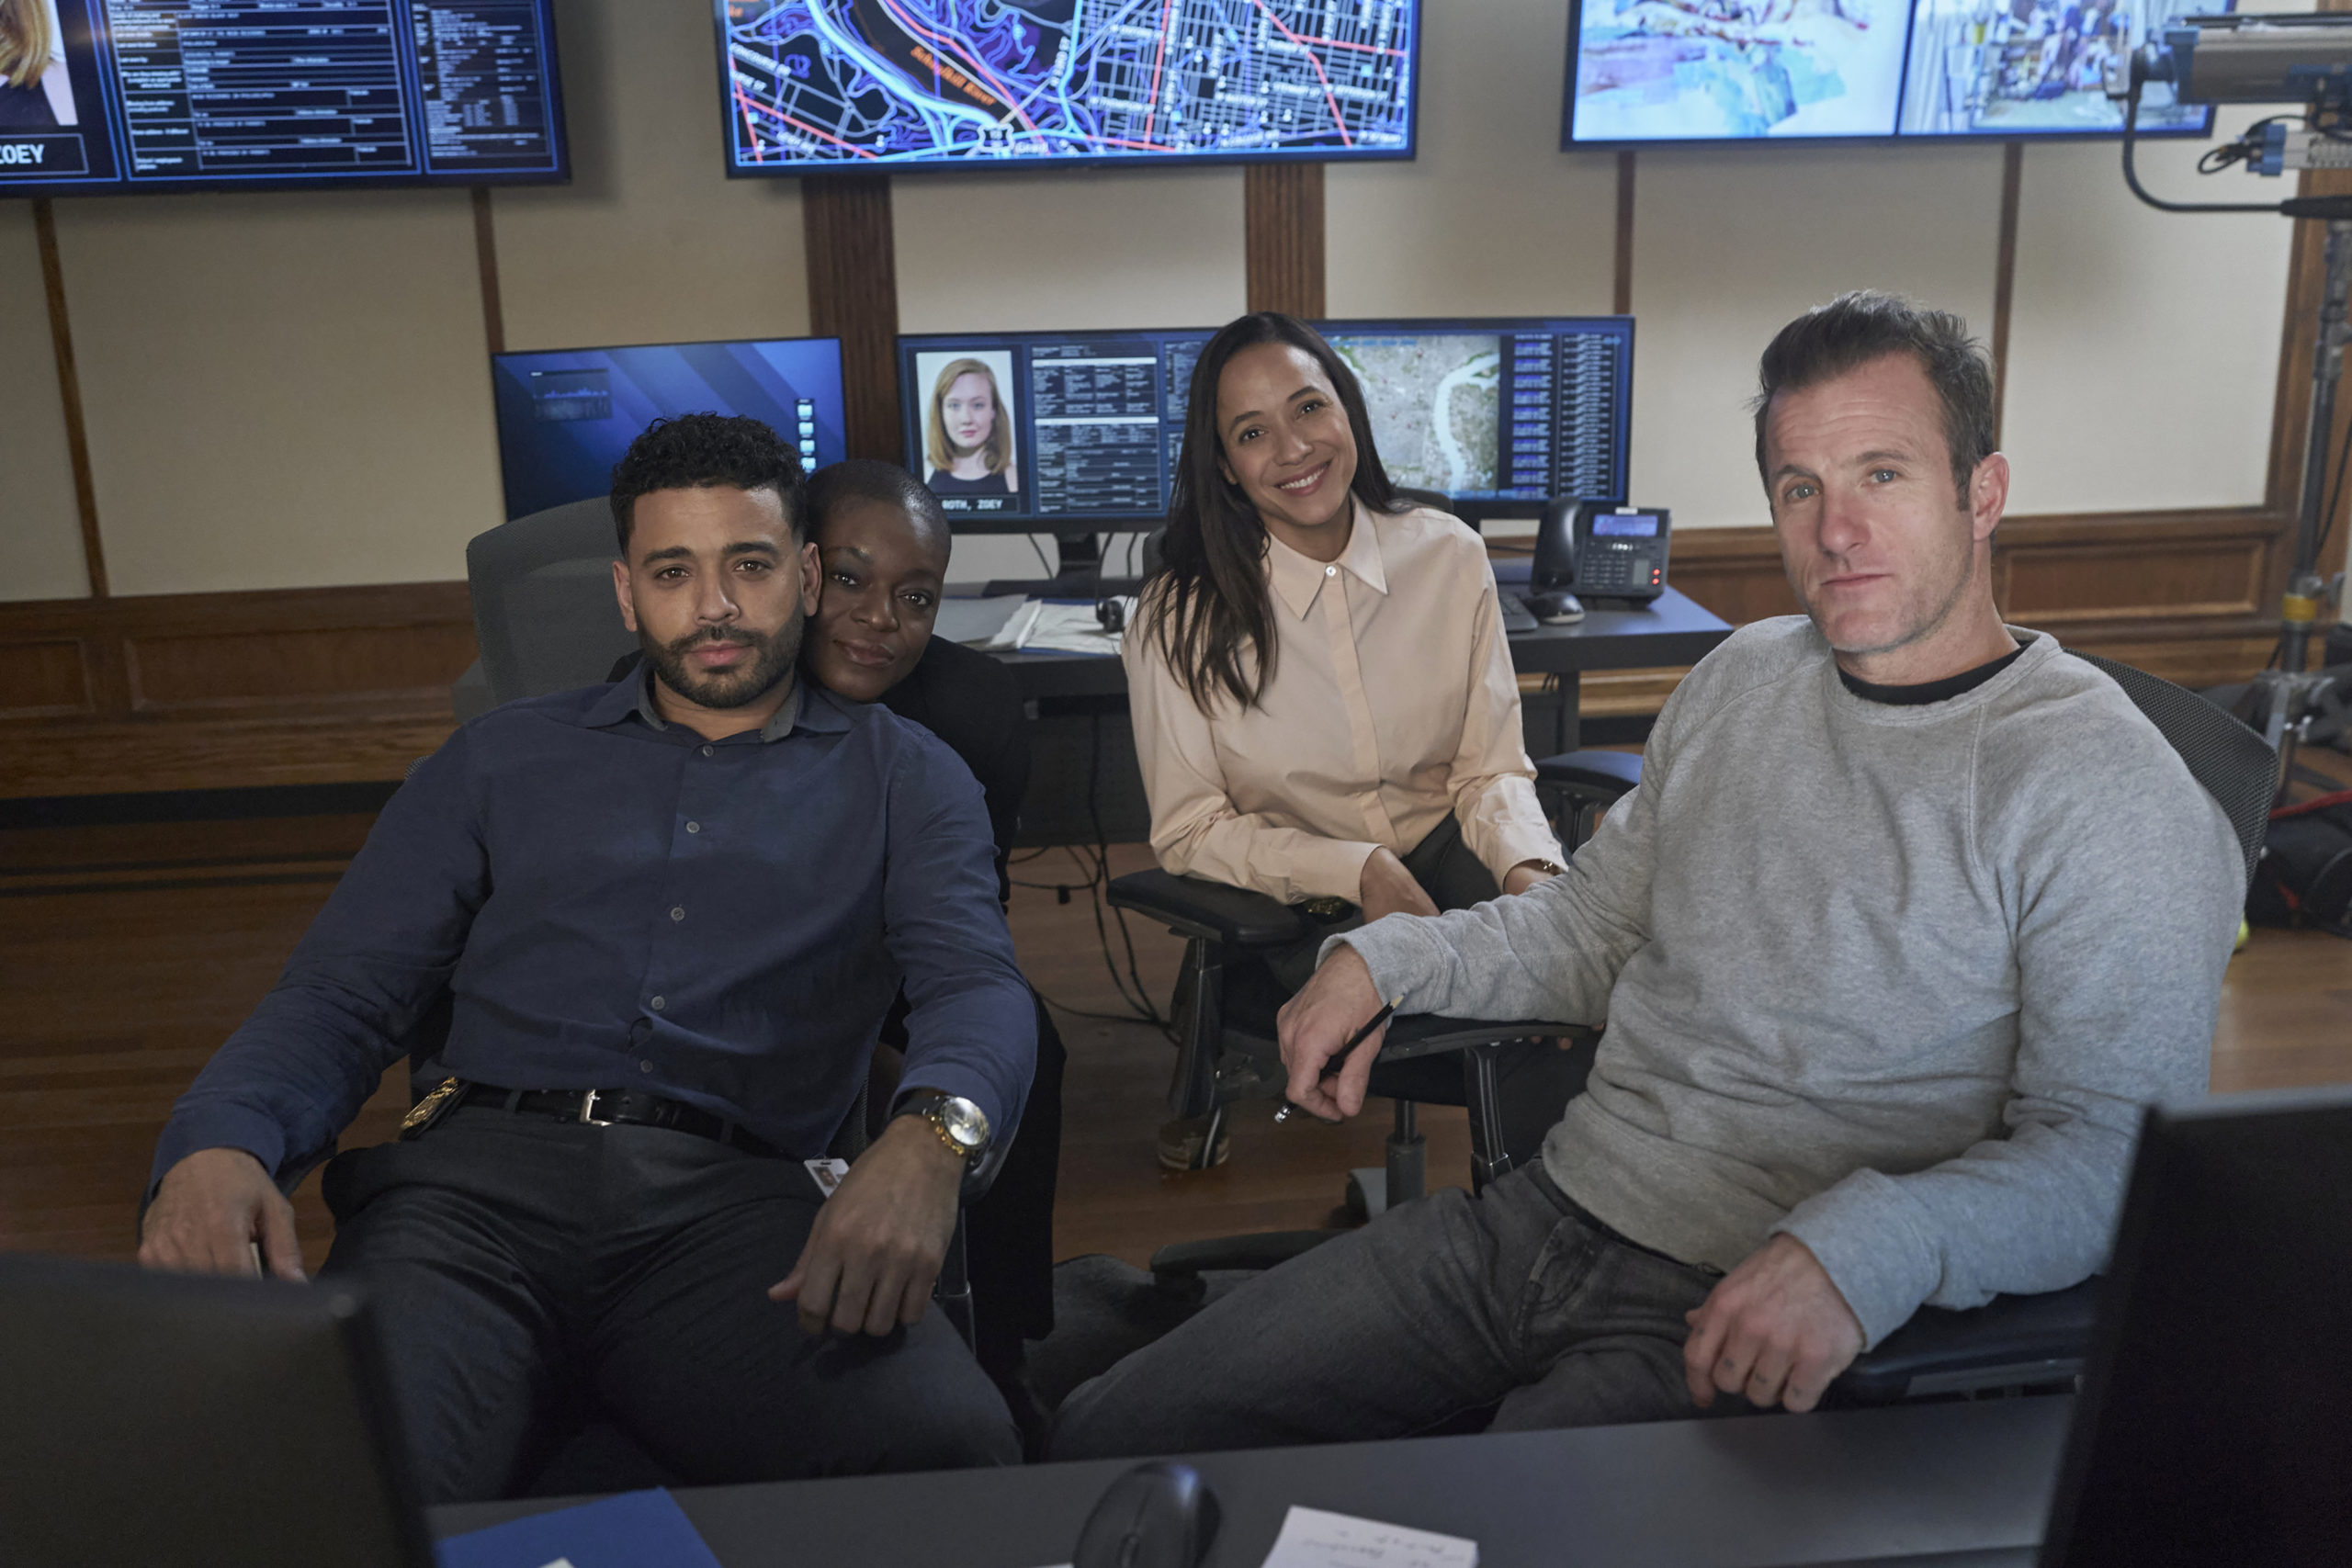 Alert Missing Persons Unit Season Two; FOX Crime Drama Series Renewed